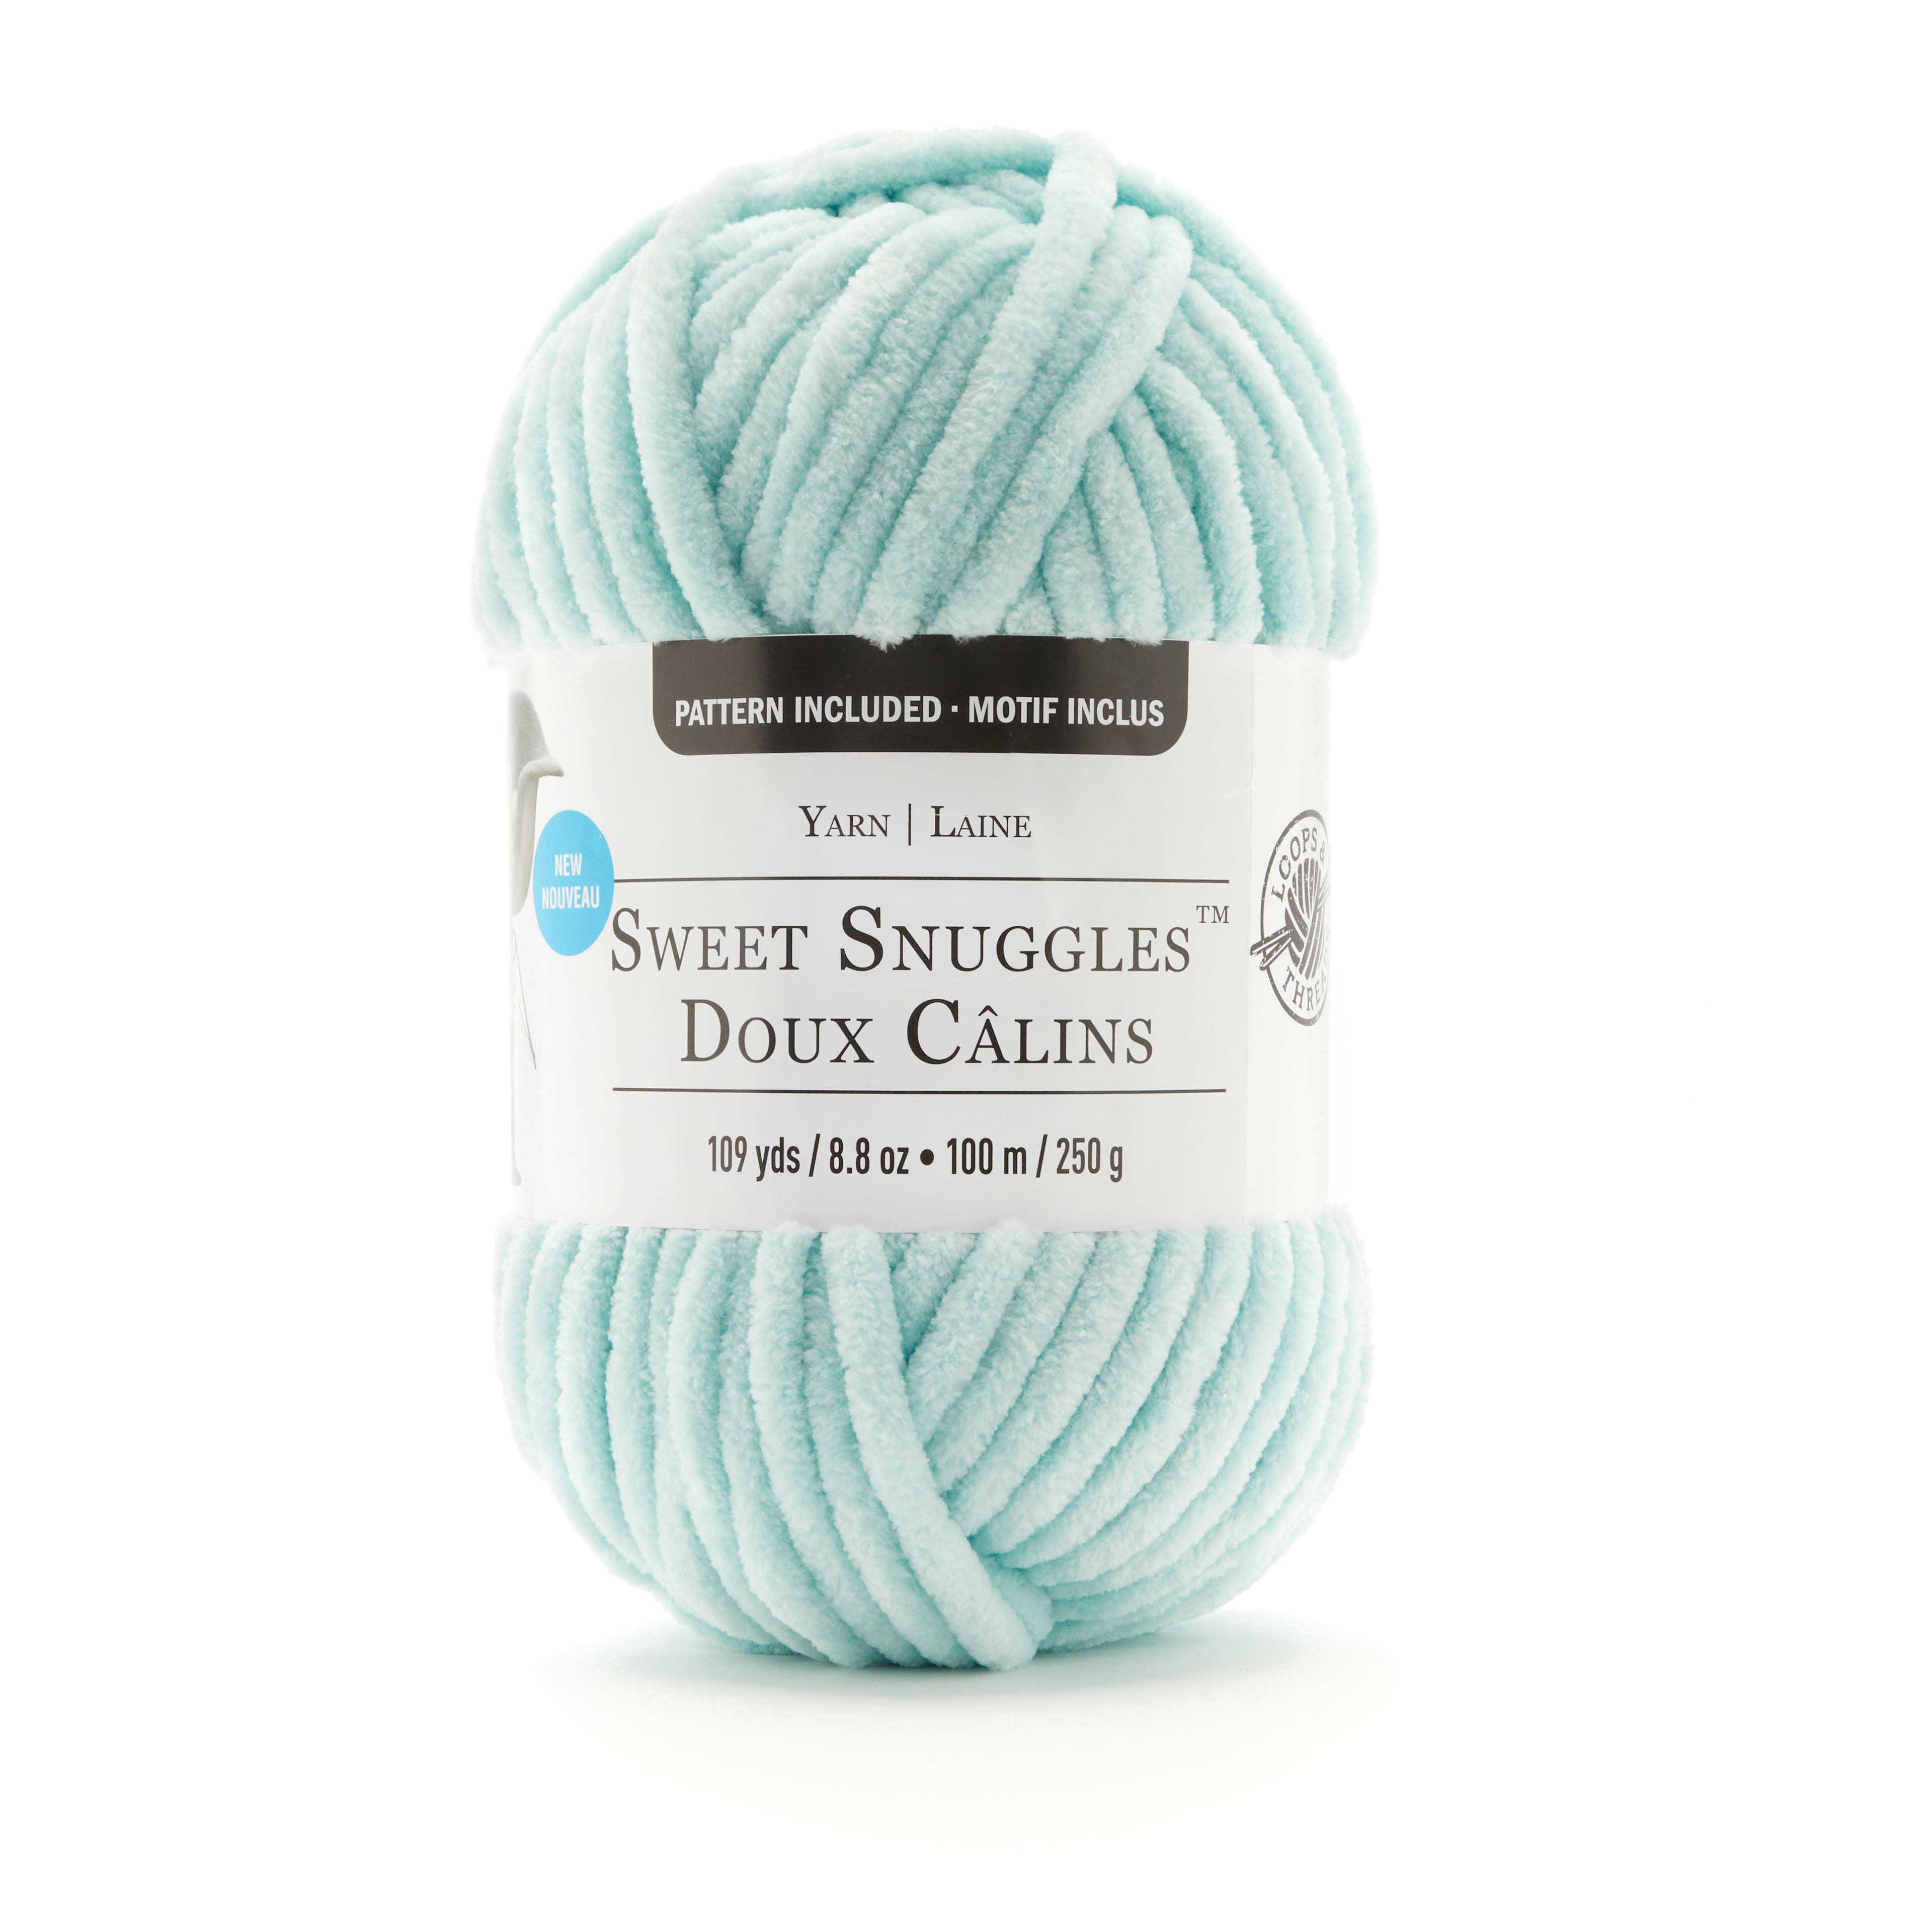 Sweet Snuggles Yarn by Loops & Threads® 